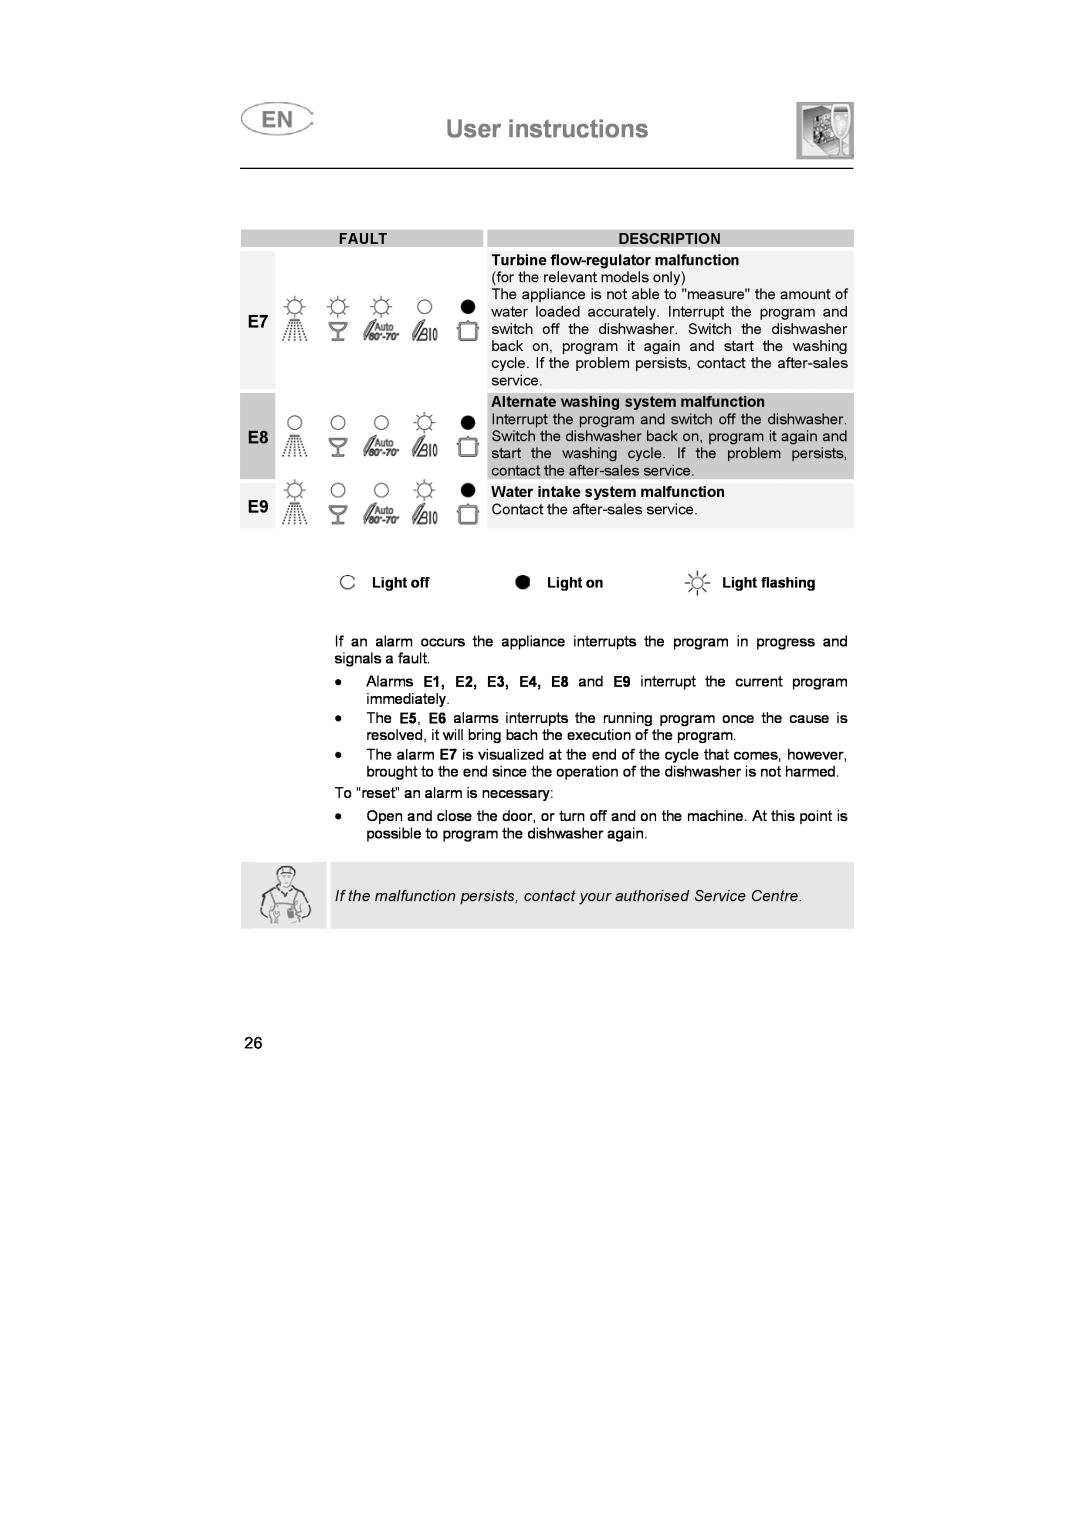 Smeg BLV1R instruction manual E7 E8 E9, User instructions, Fault, Description, Turbine flow-regulator malfunction 